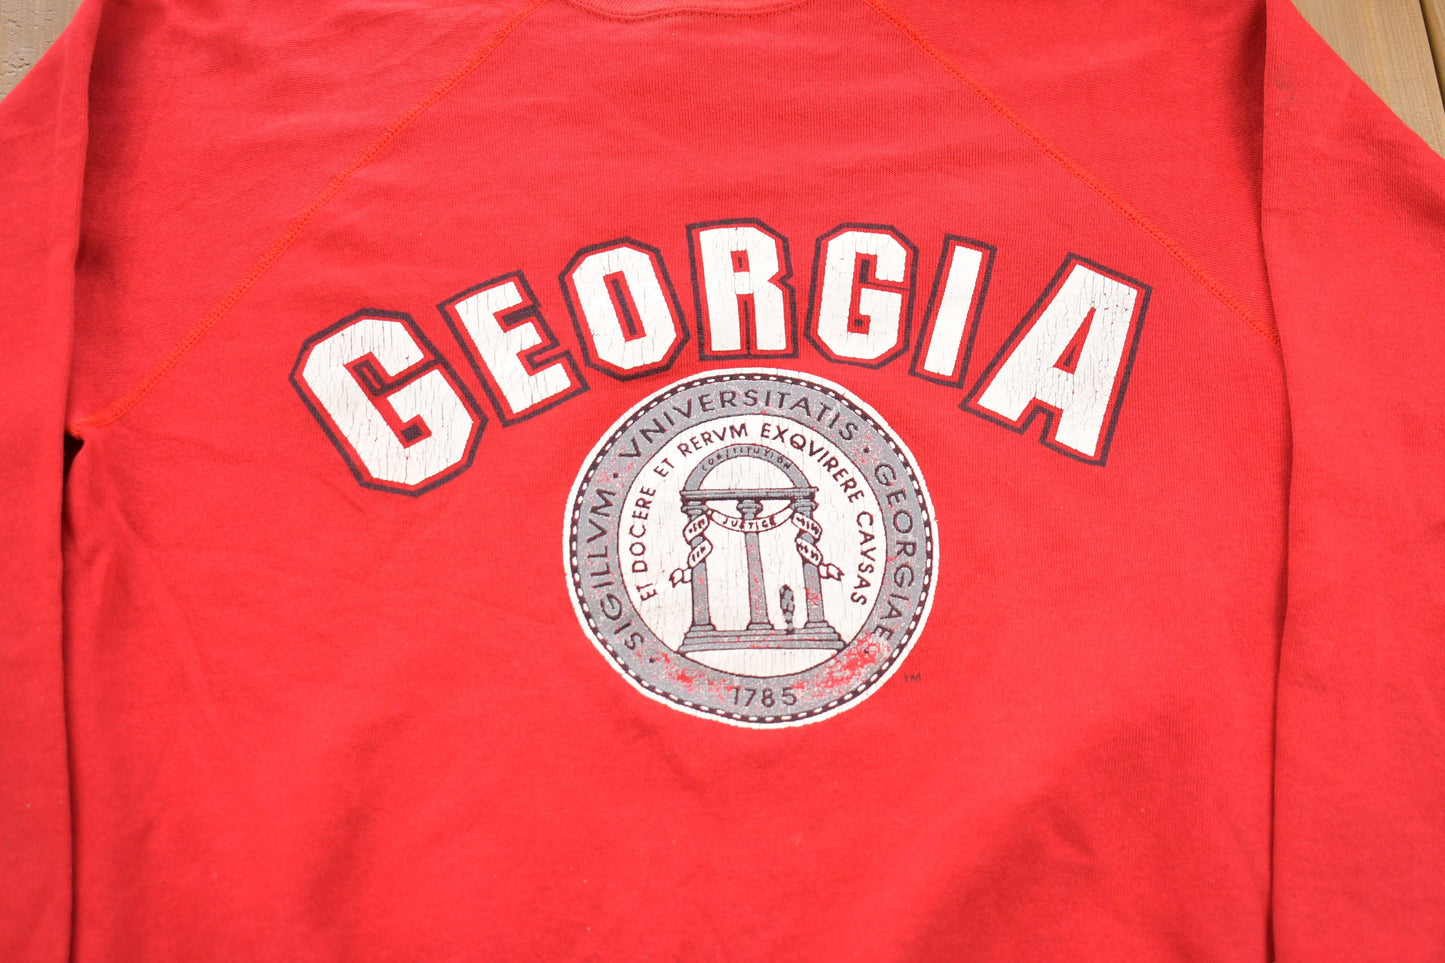 Vintage 1980s University of Georgia Graphic Collegiate Crewneck / Collegiate / NCAA Sweatshirt / Sportswear / Americana / 80s Georgia